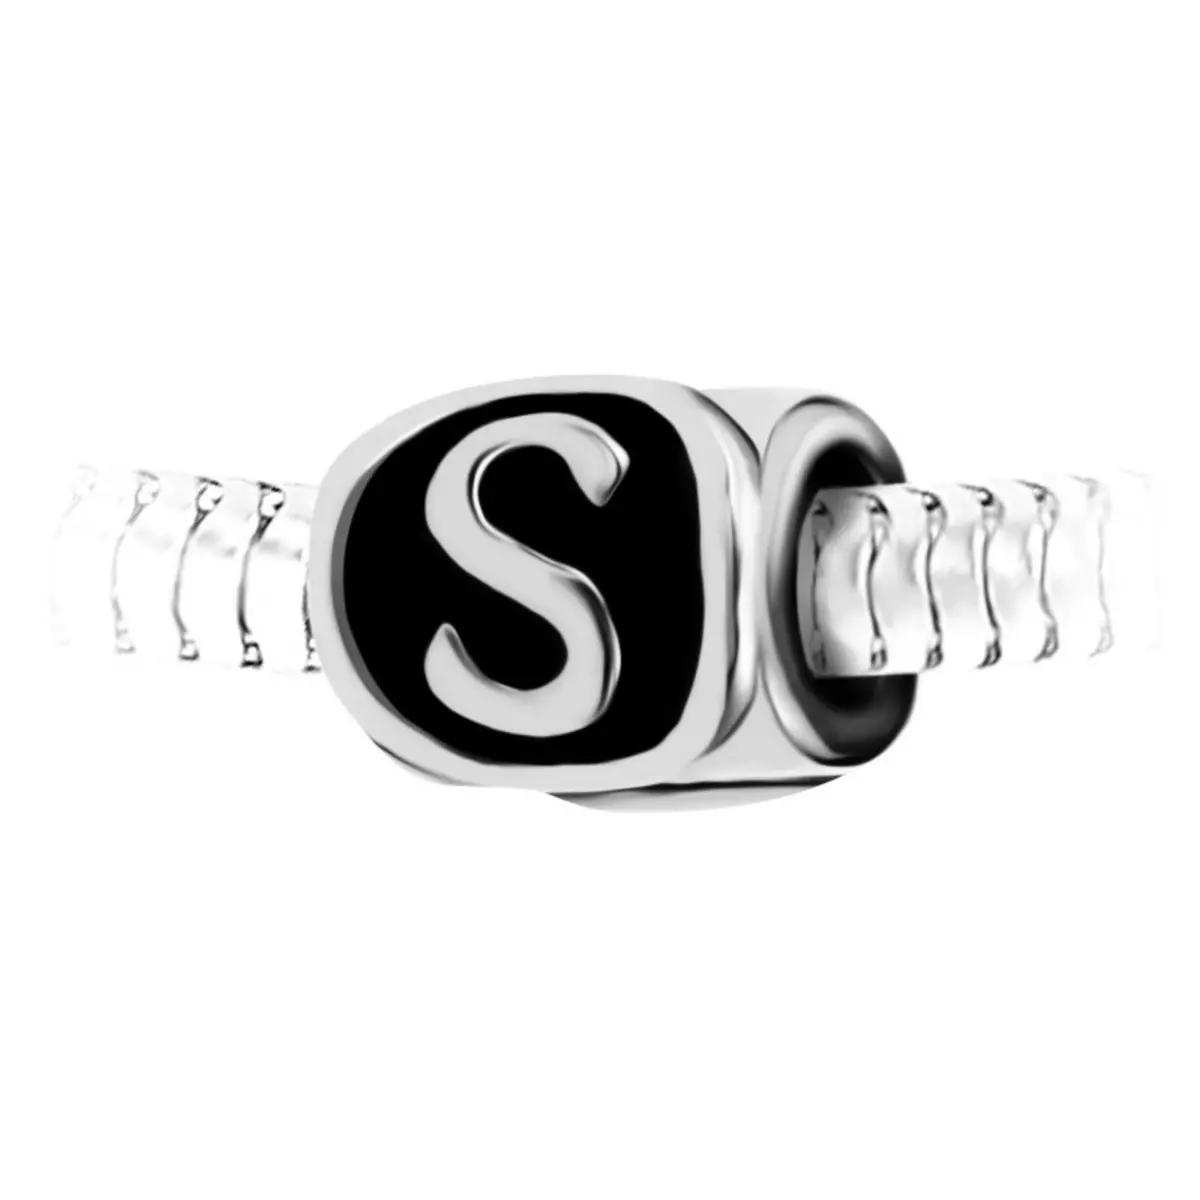 SC CRYSTAL Charm perle lettre S en acier par SC Crystal perle